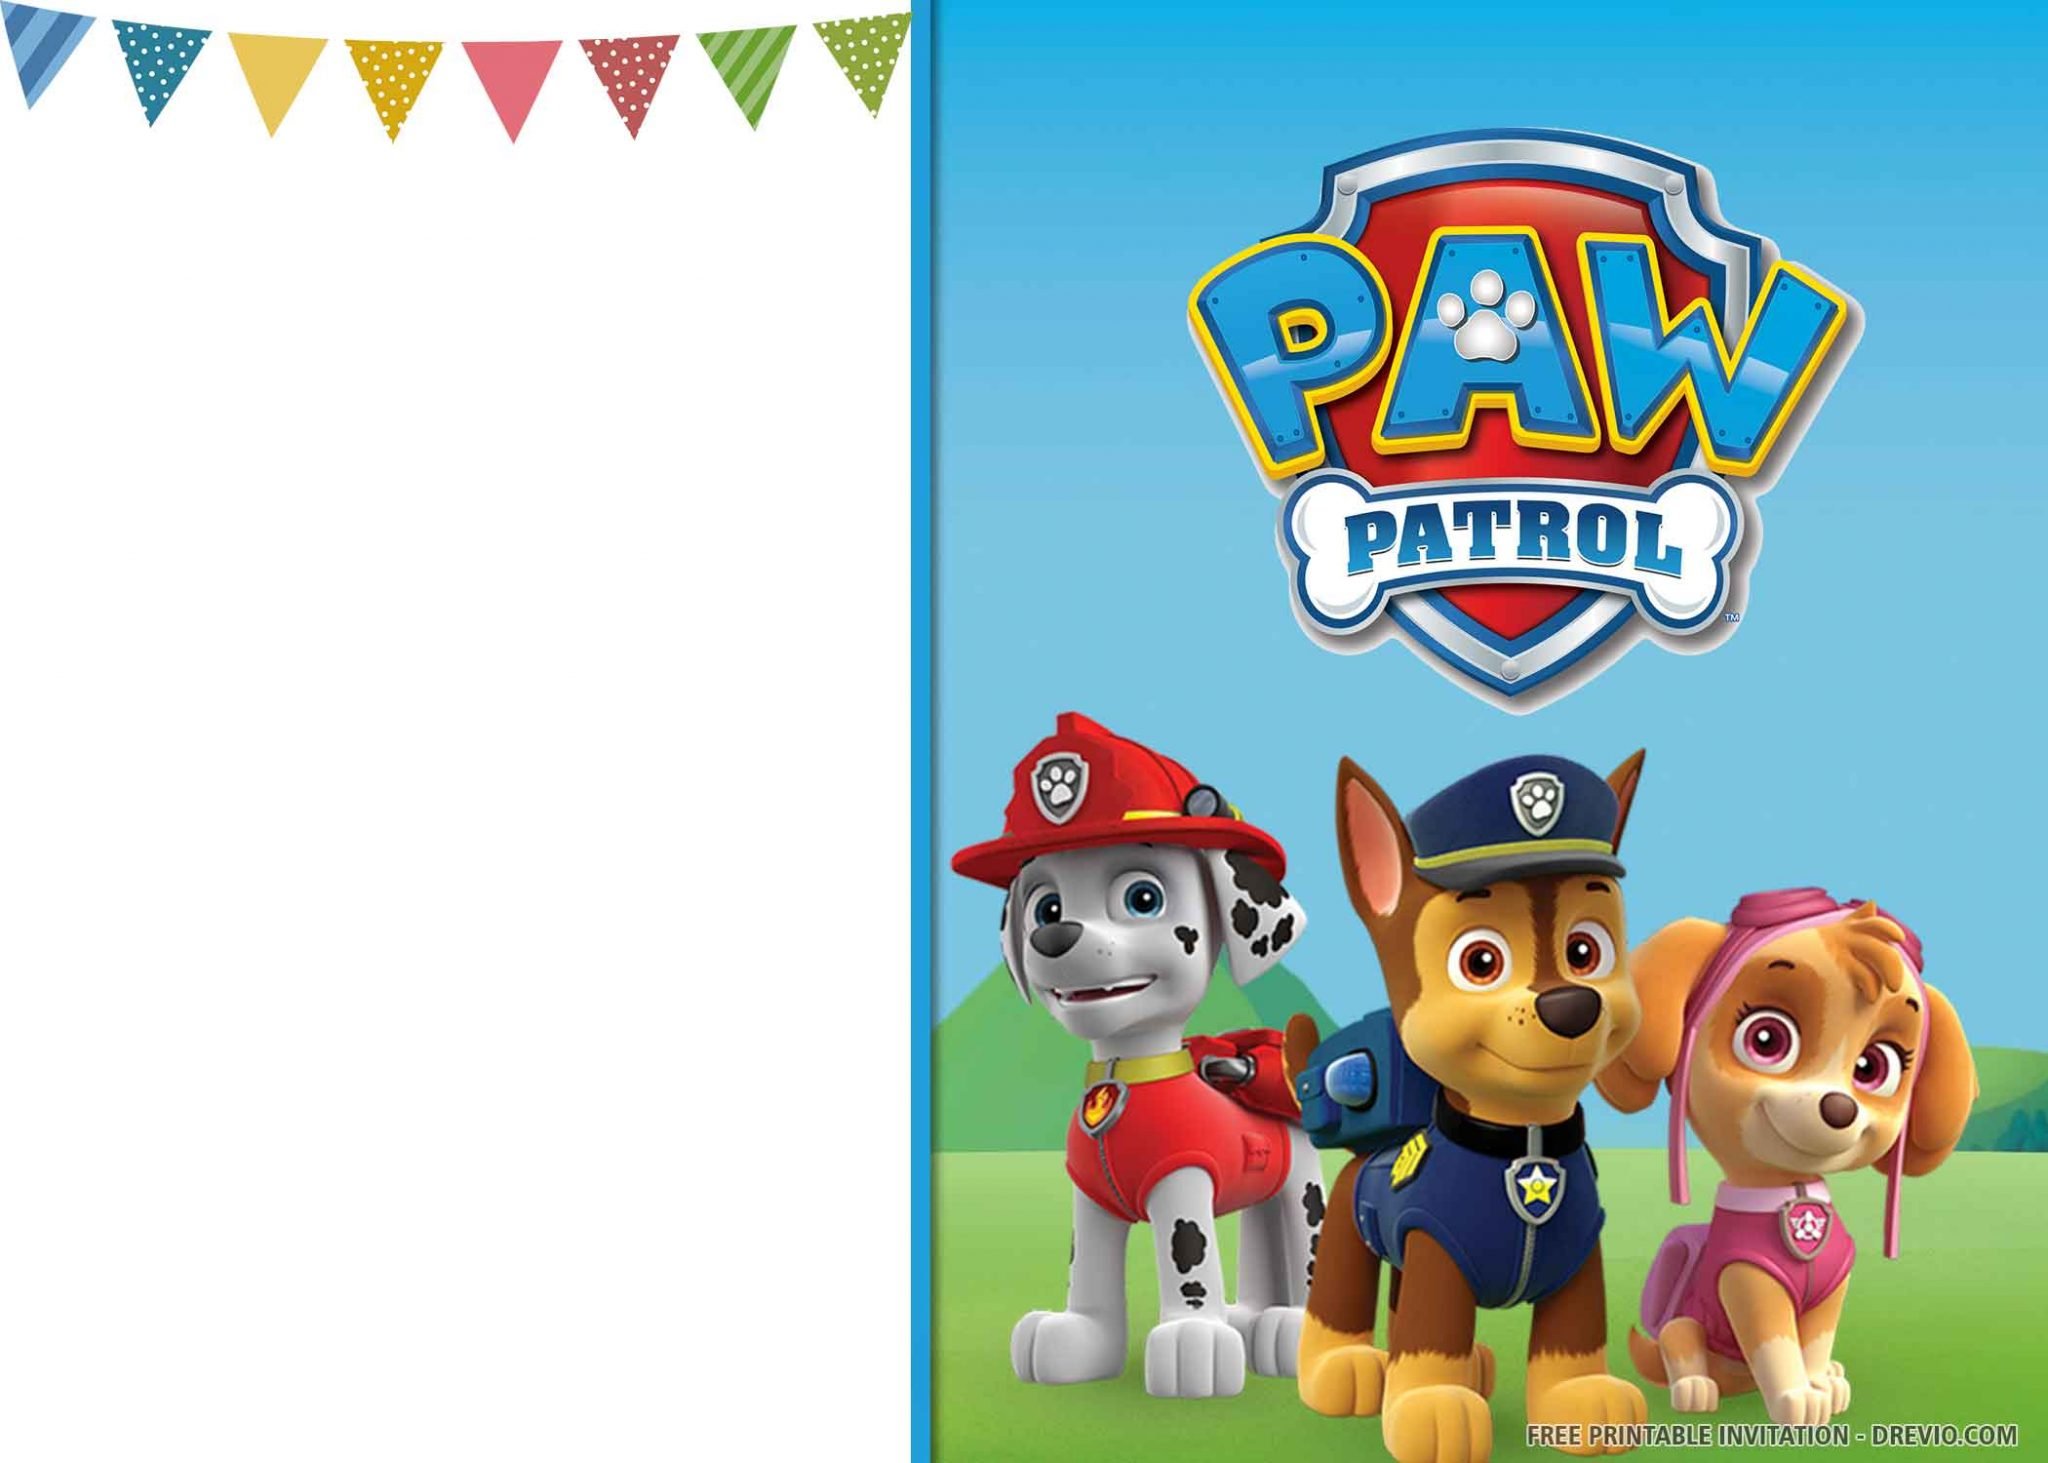 free-printable-paw-patrol-birthday-invitation-template-download